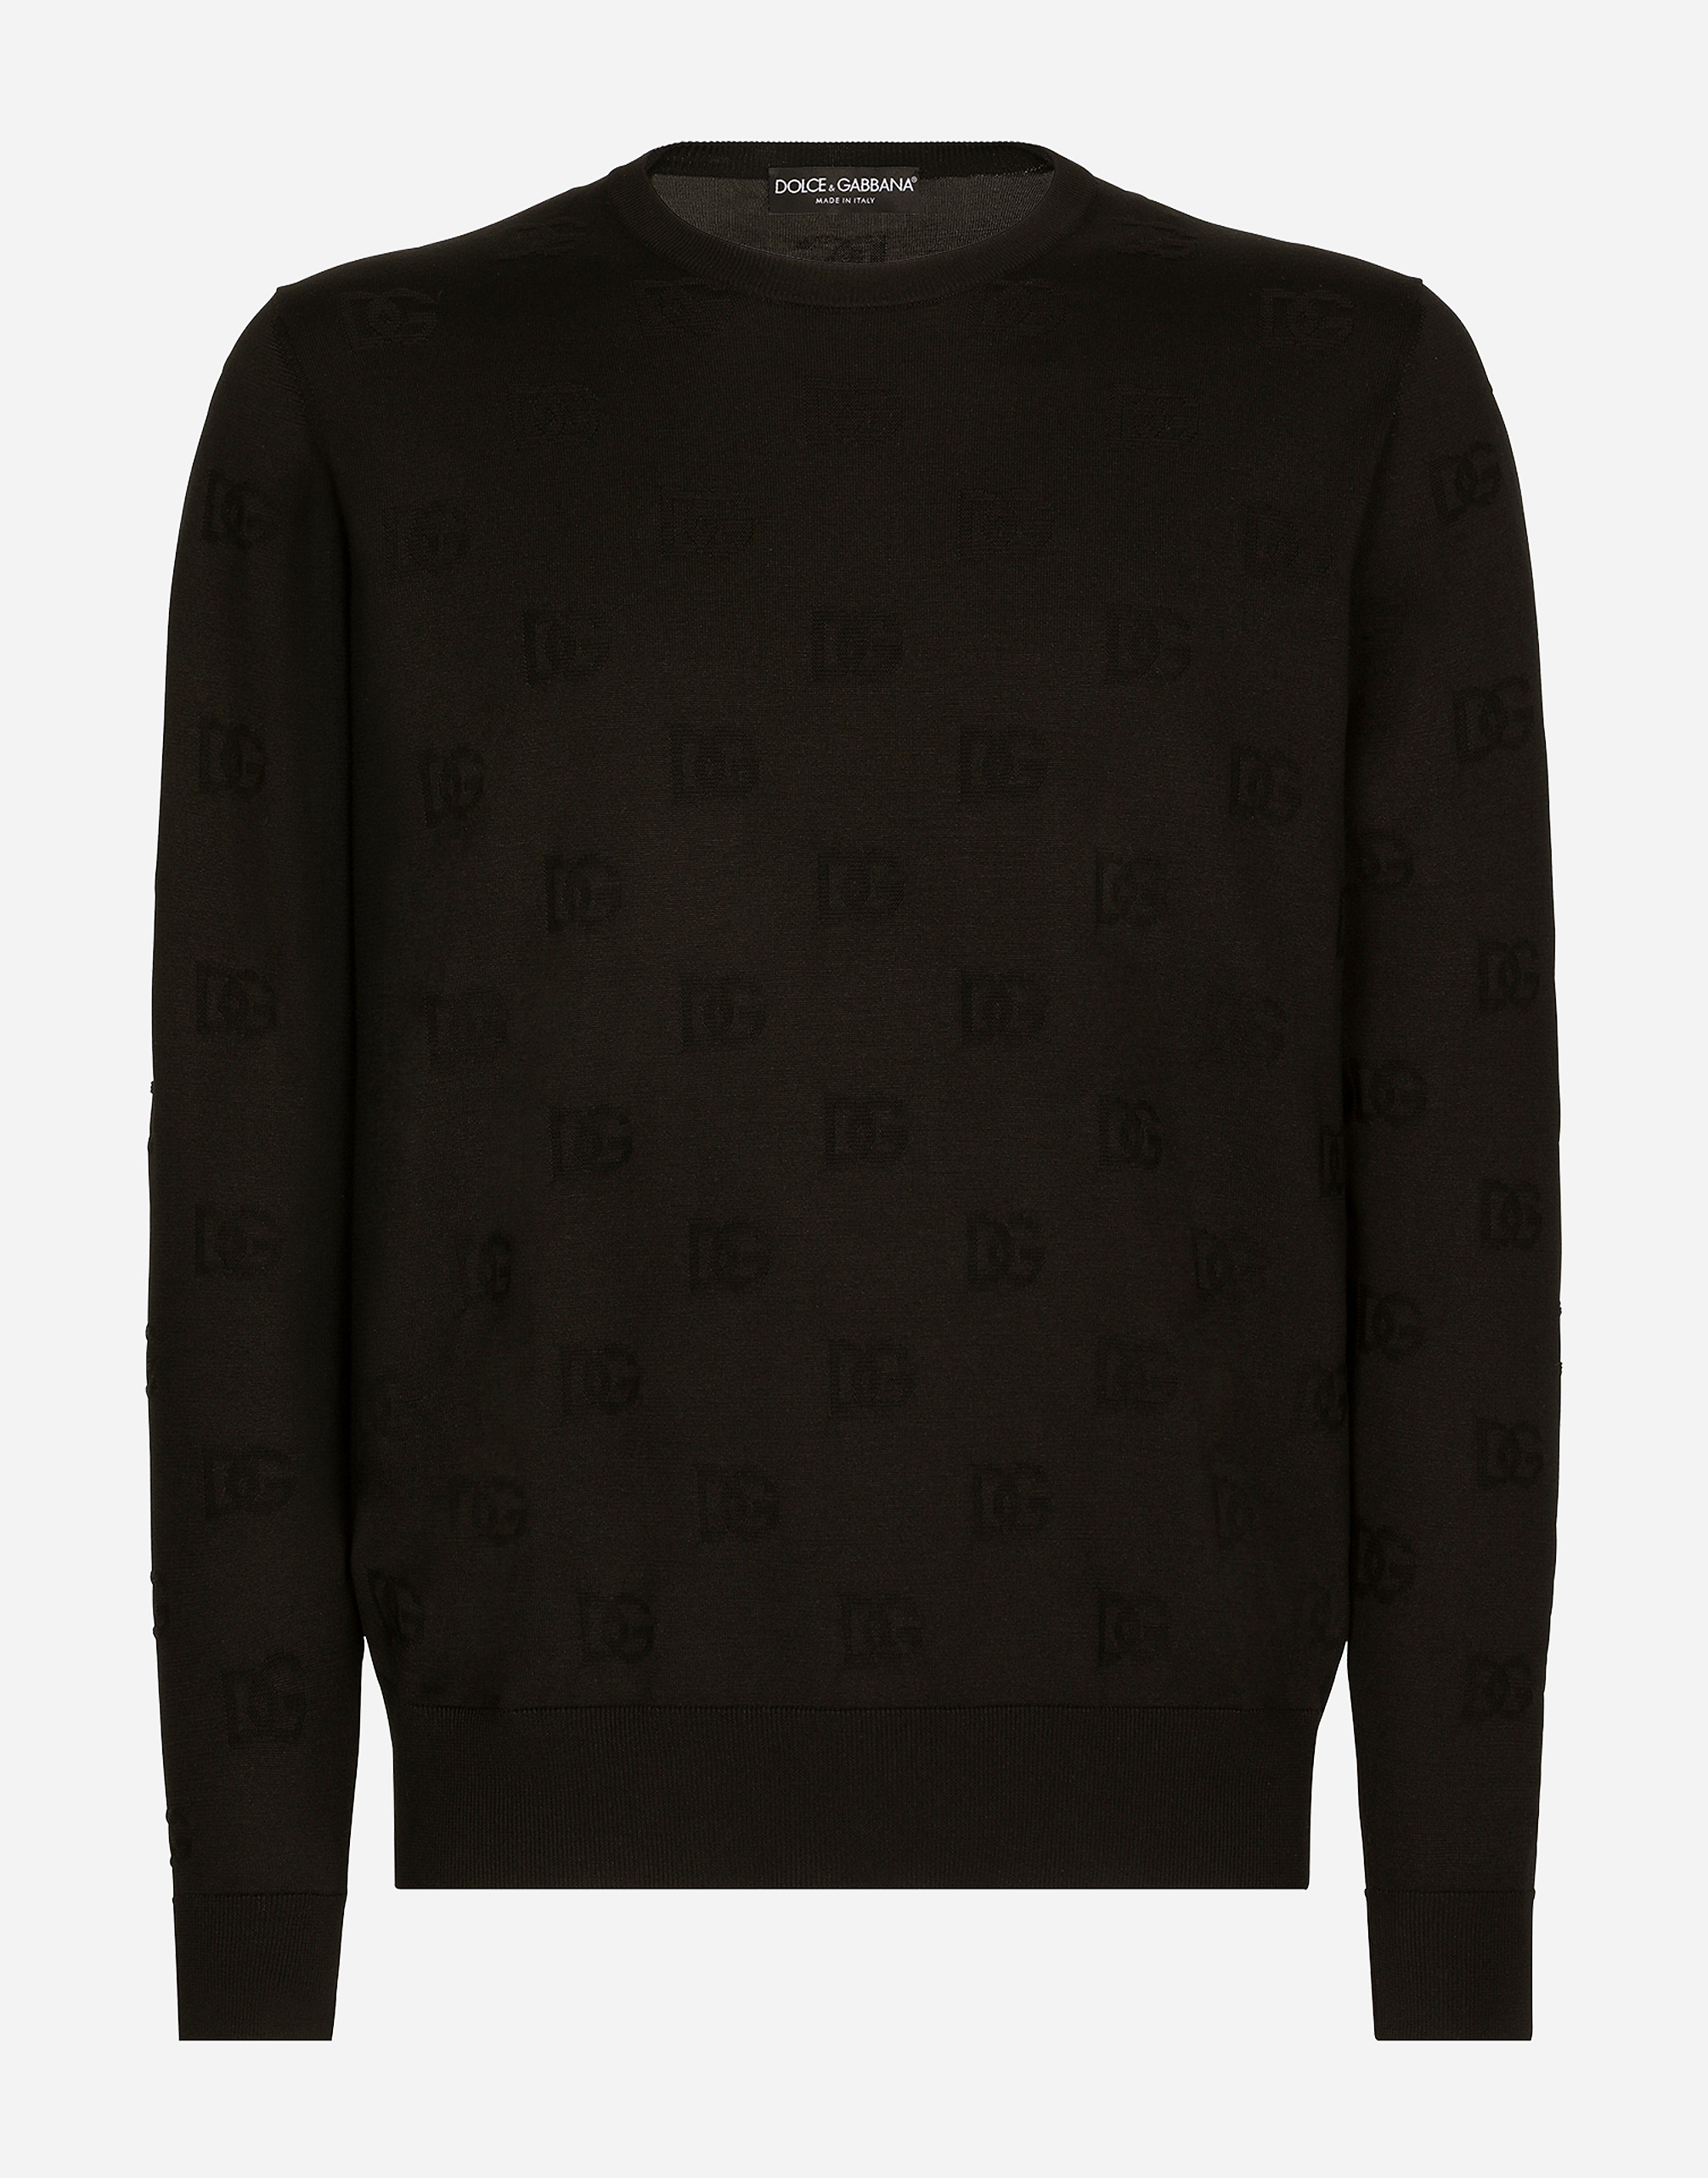 Silk jacquard round-neck sweater with DG logo in Black